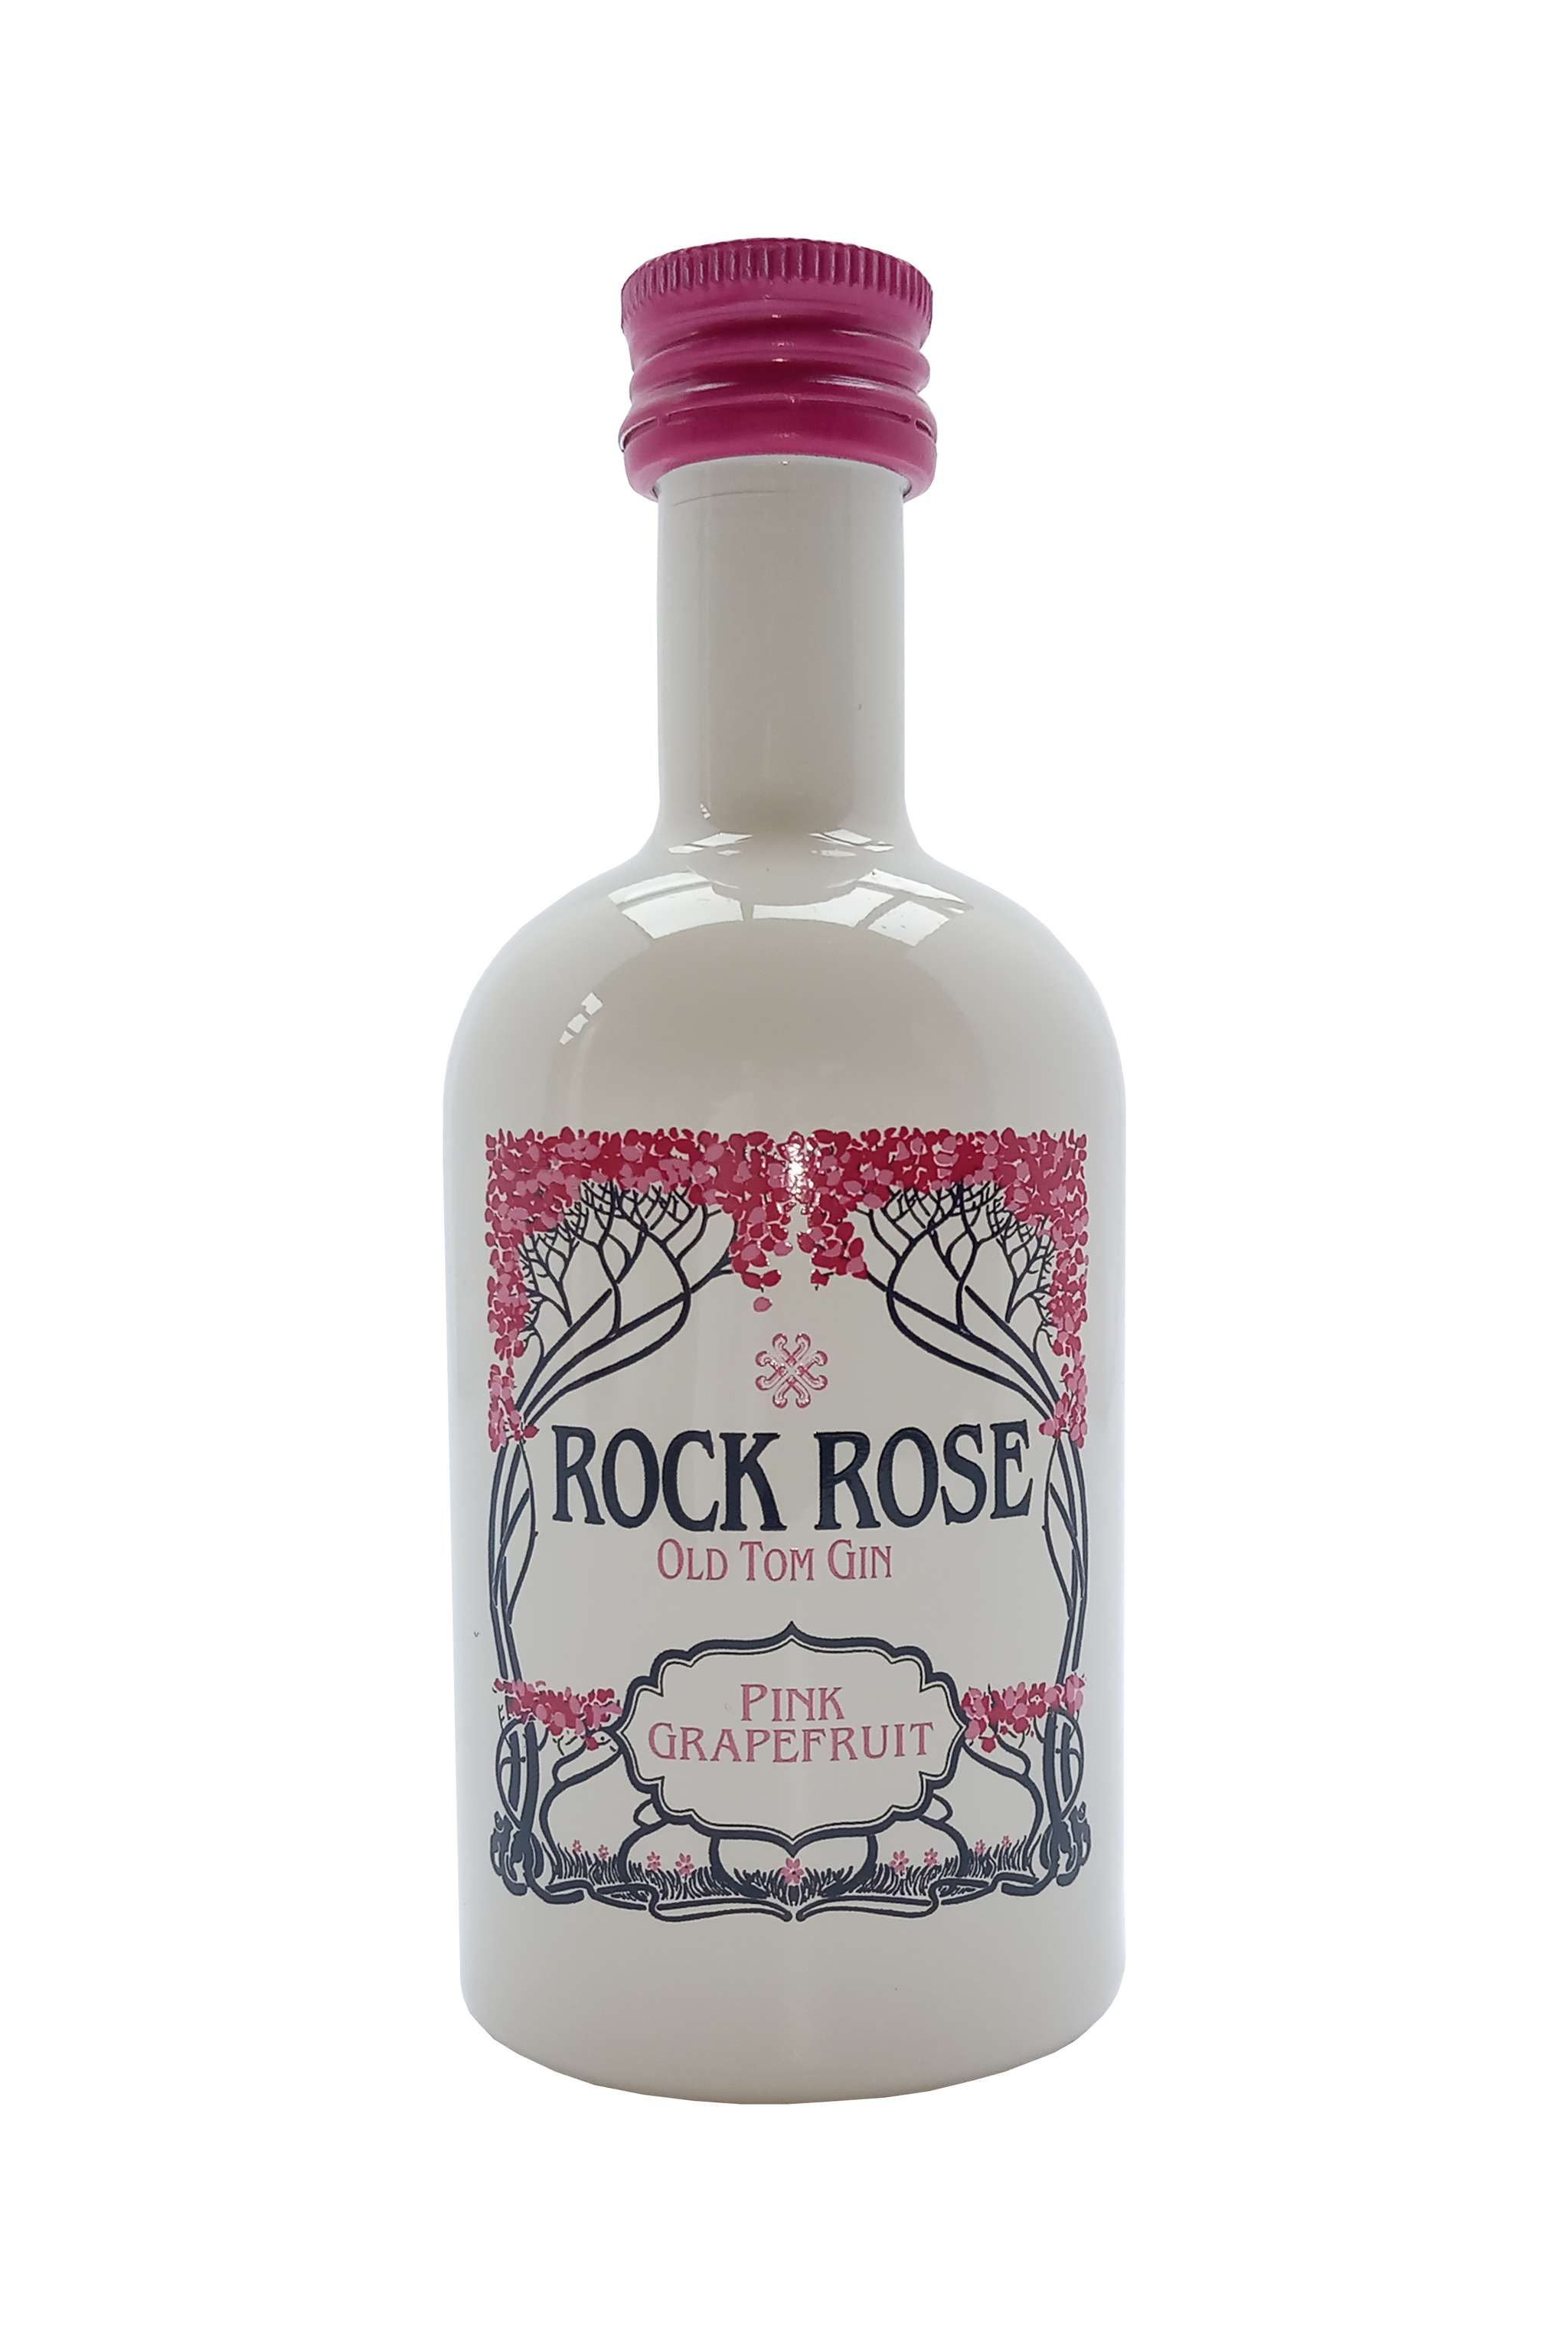 Rock Rose Pink Grapefruit Old Tom Gin Gins & Gin Liqueurs